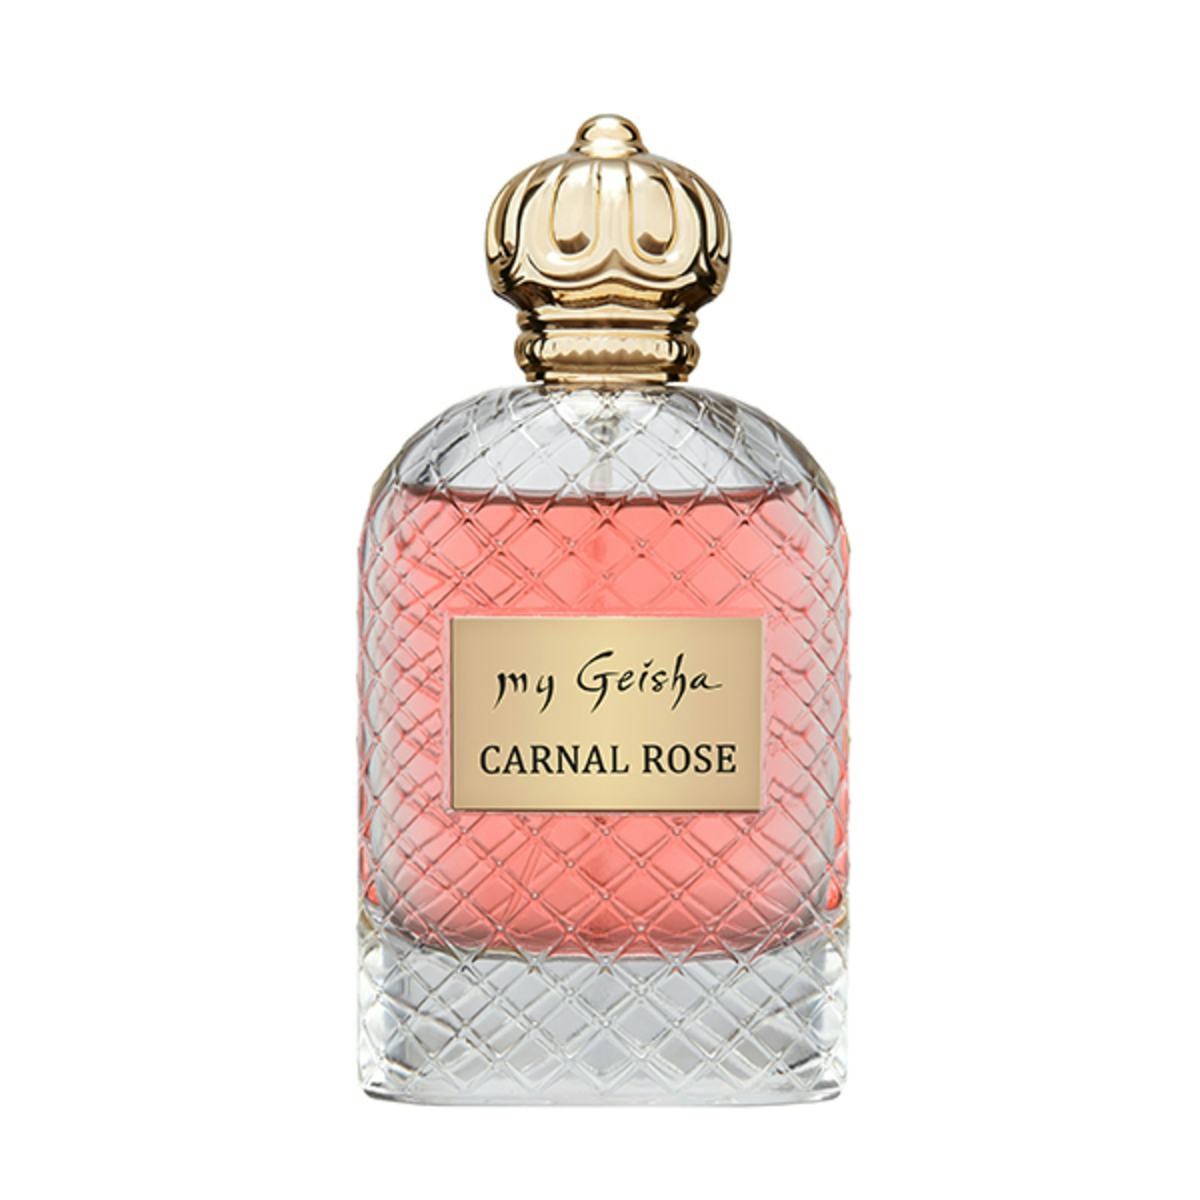 Extrait de parfum Carnal Rose 100ml, artisanal product for direct sale in Switzerland